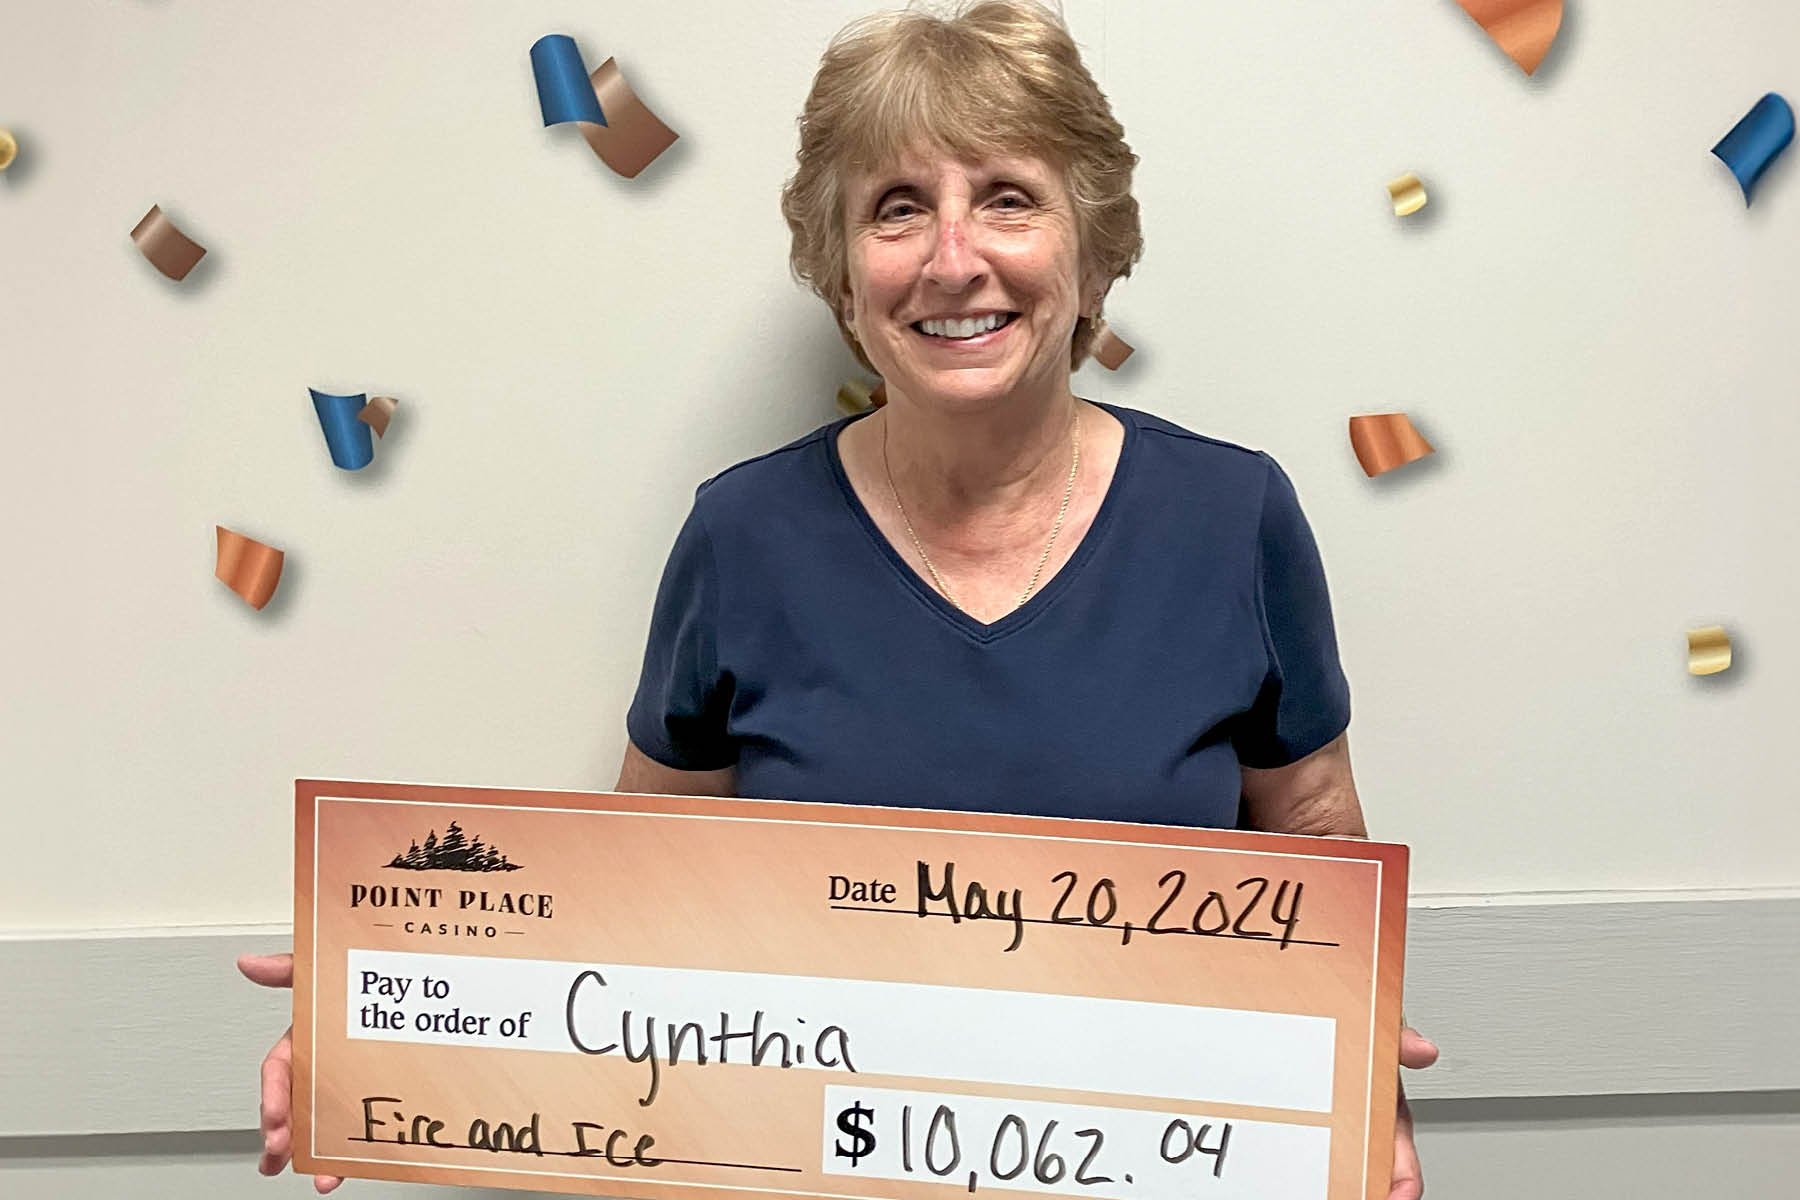 Cynthia won $10,062